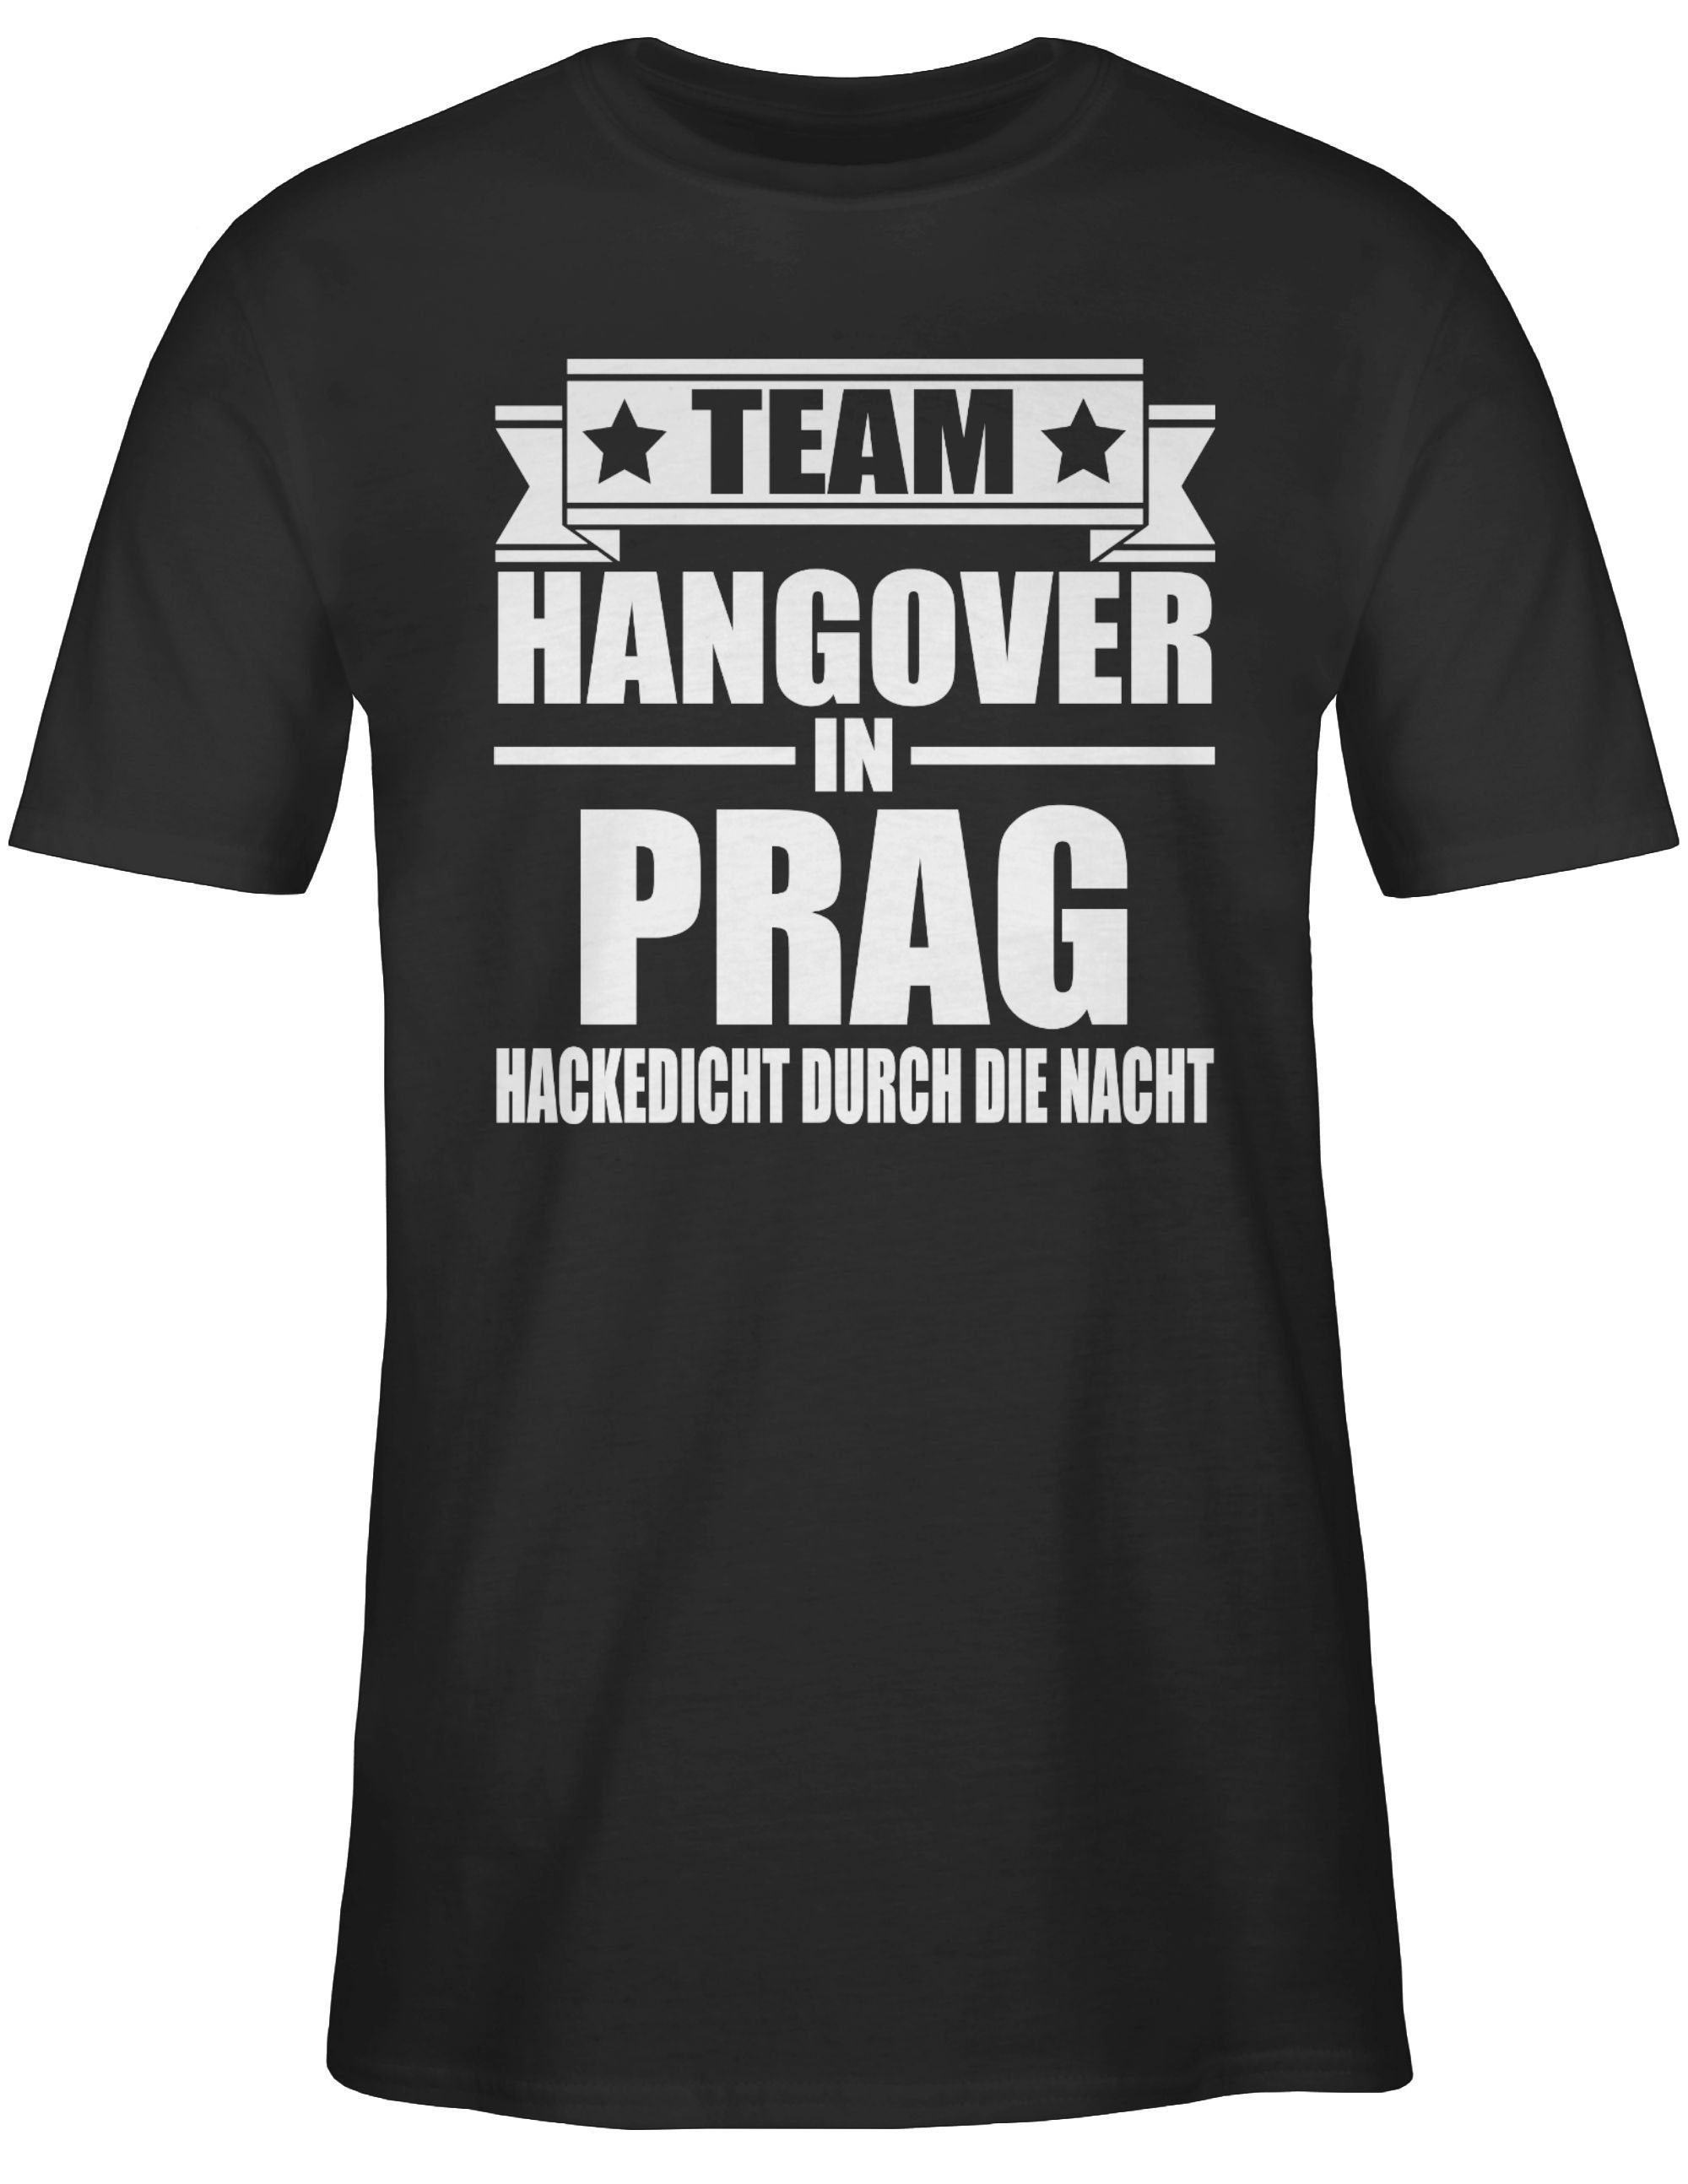 1 in Männer Shirtracer Team Prag Hangover JGA Schwarz T-Shirt